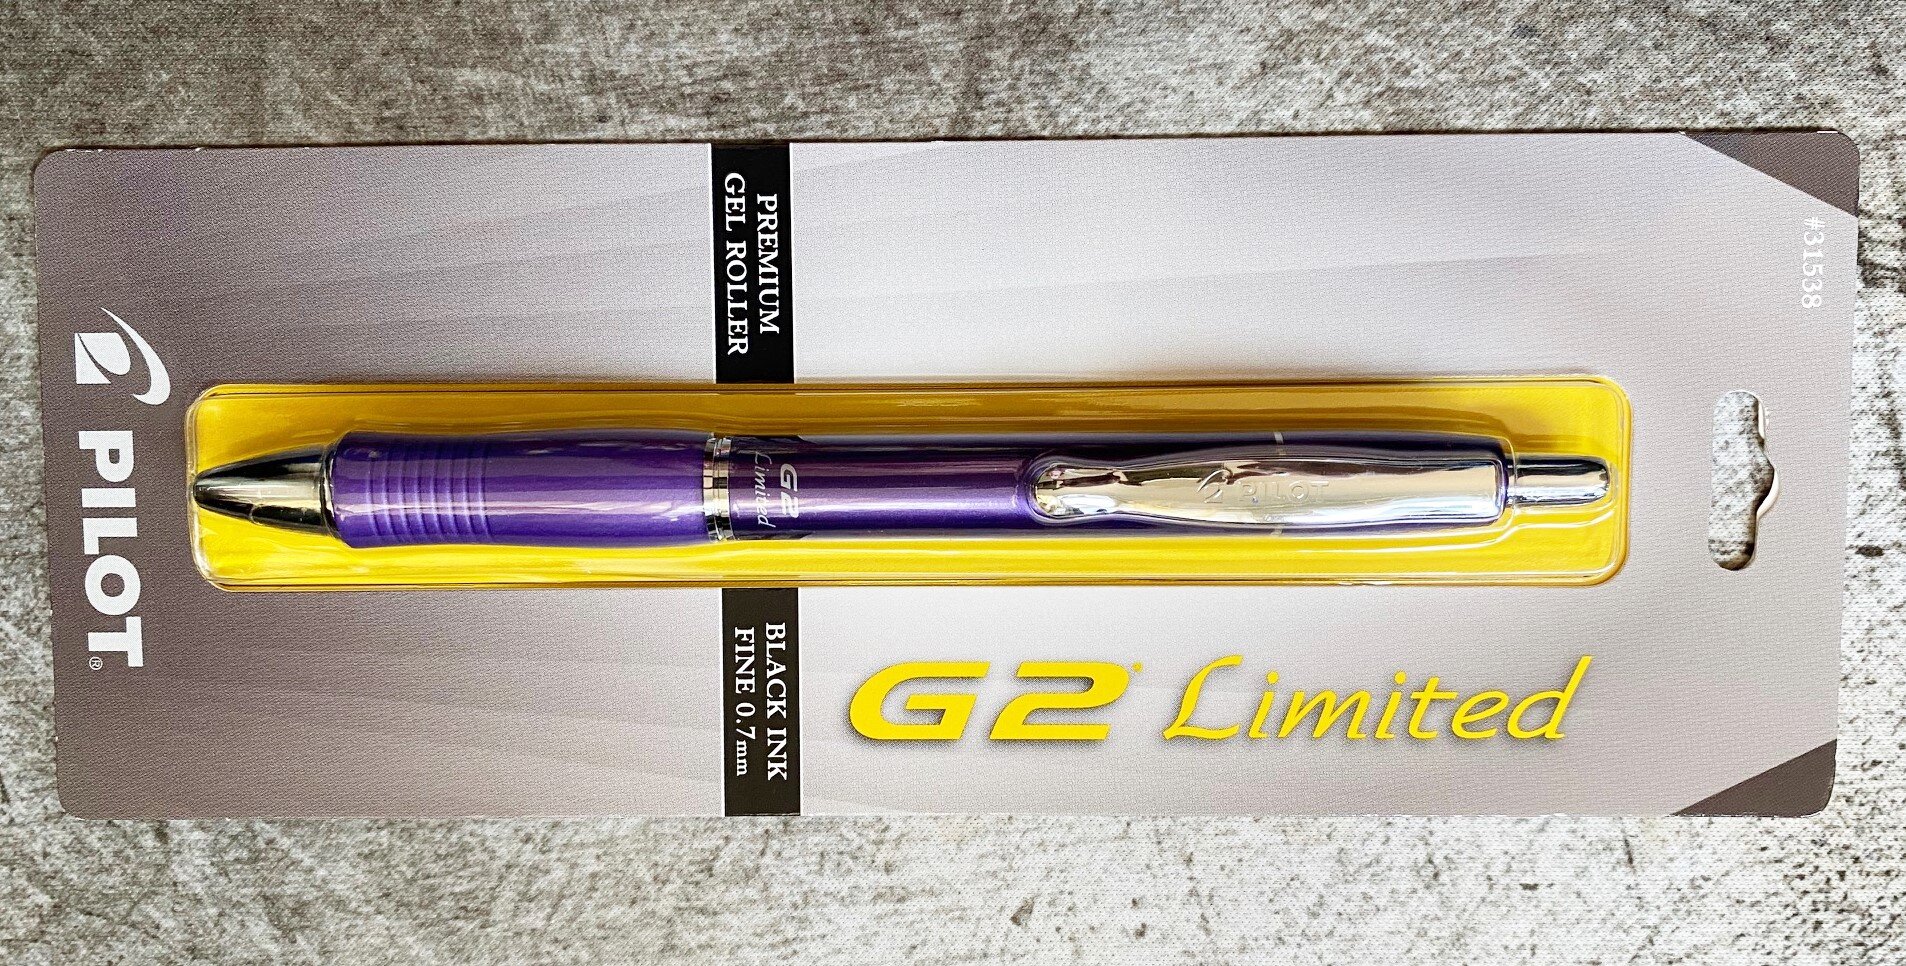 Pilot G2 Pens with 3 Bonus Pens